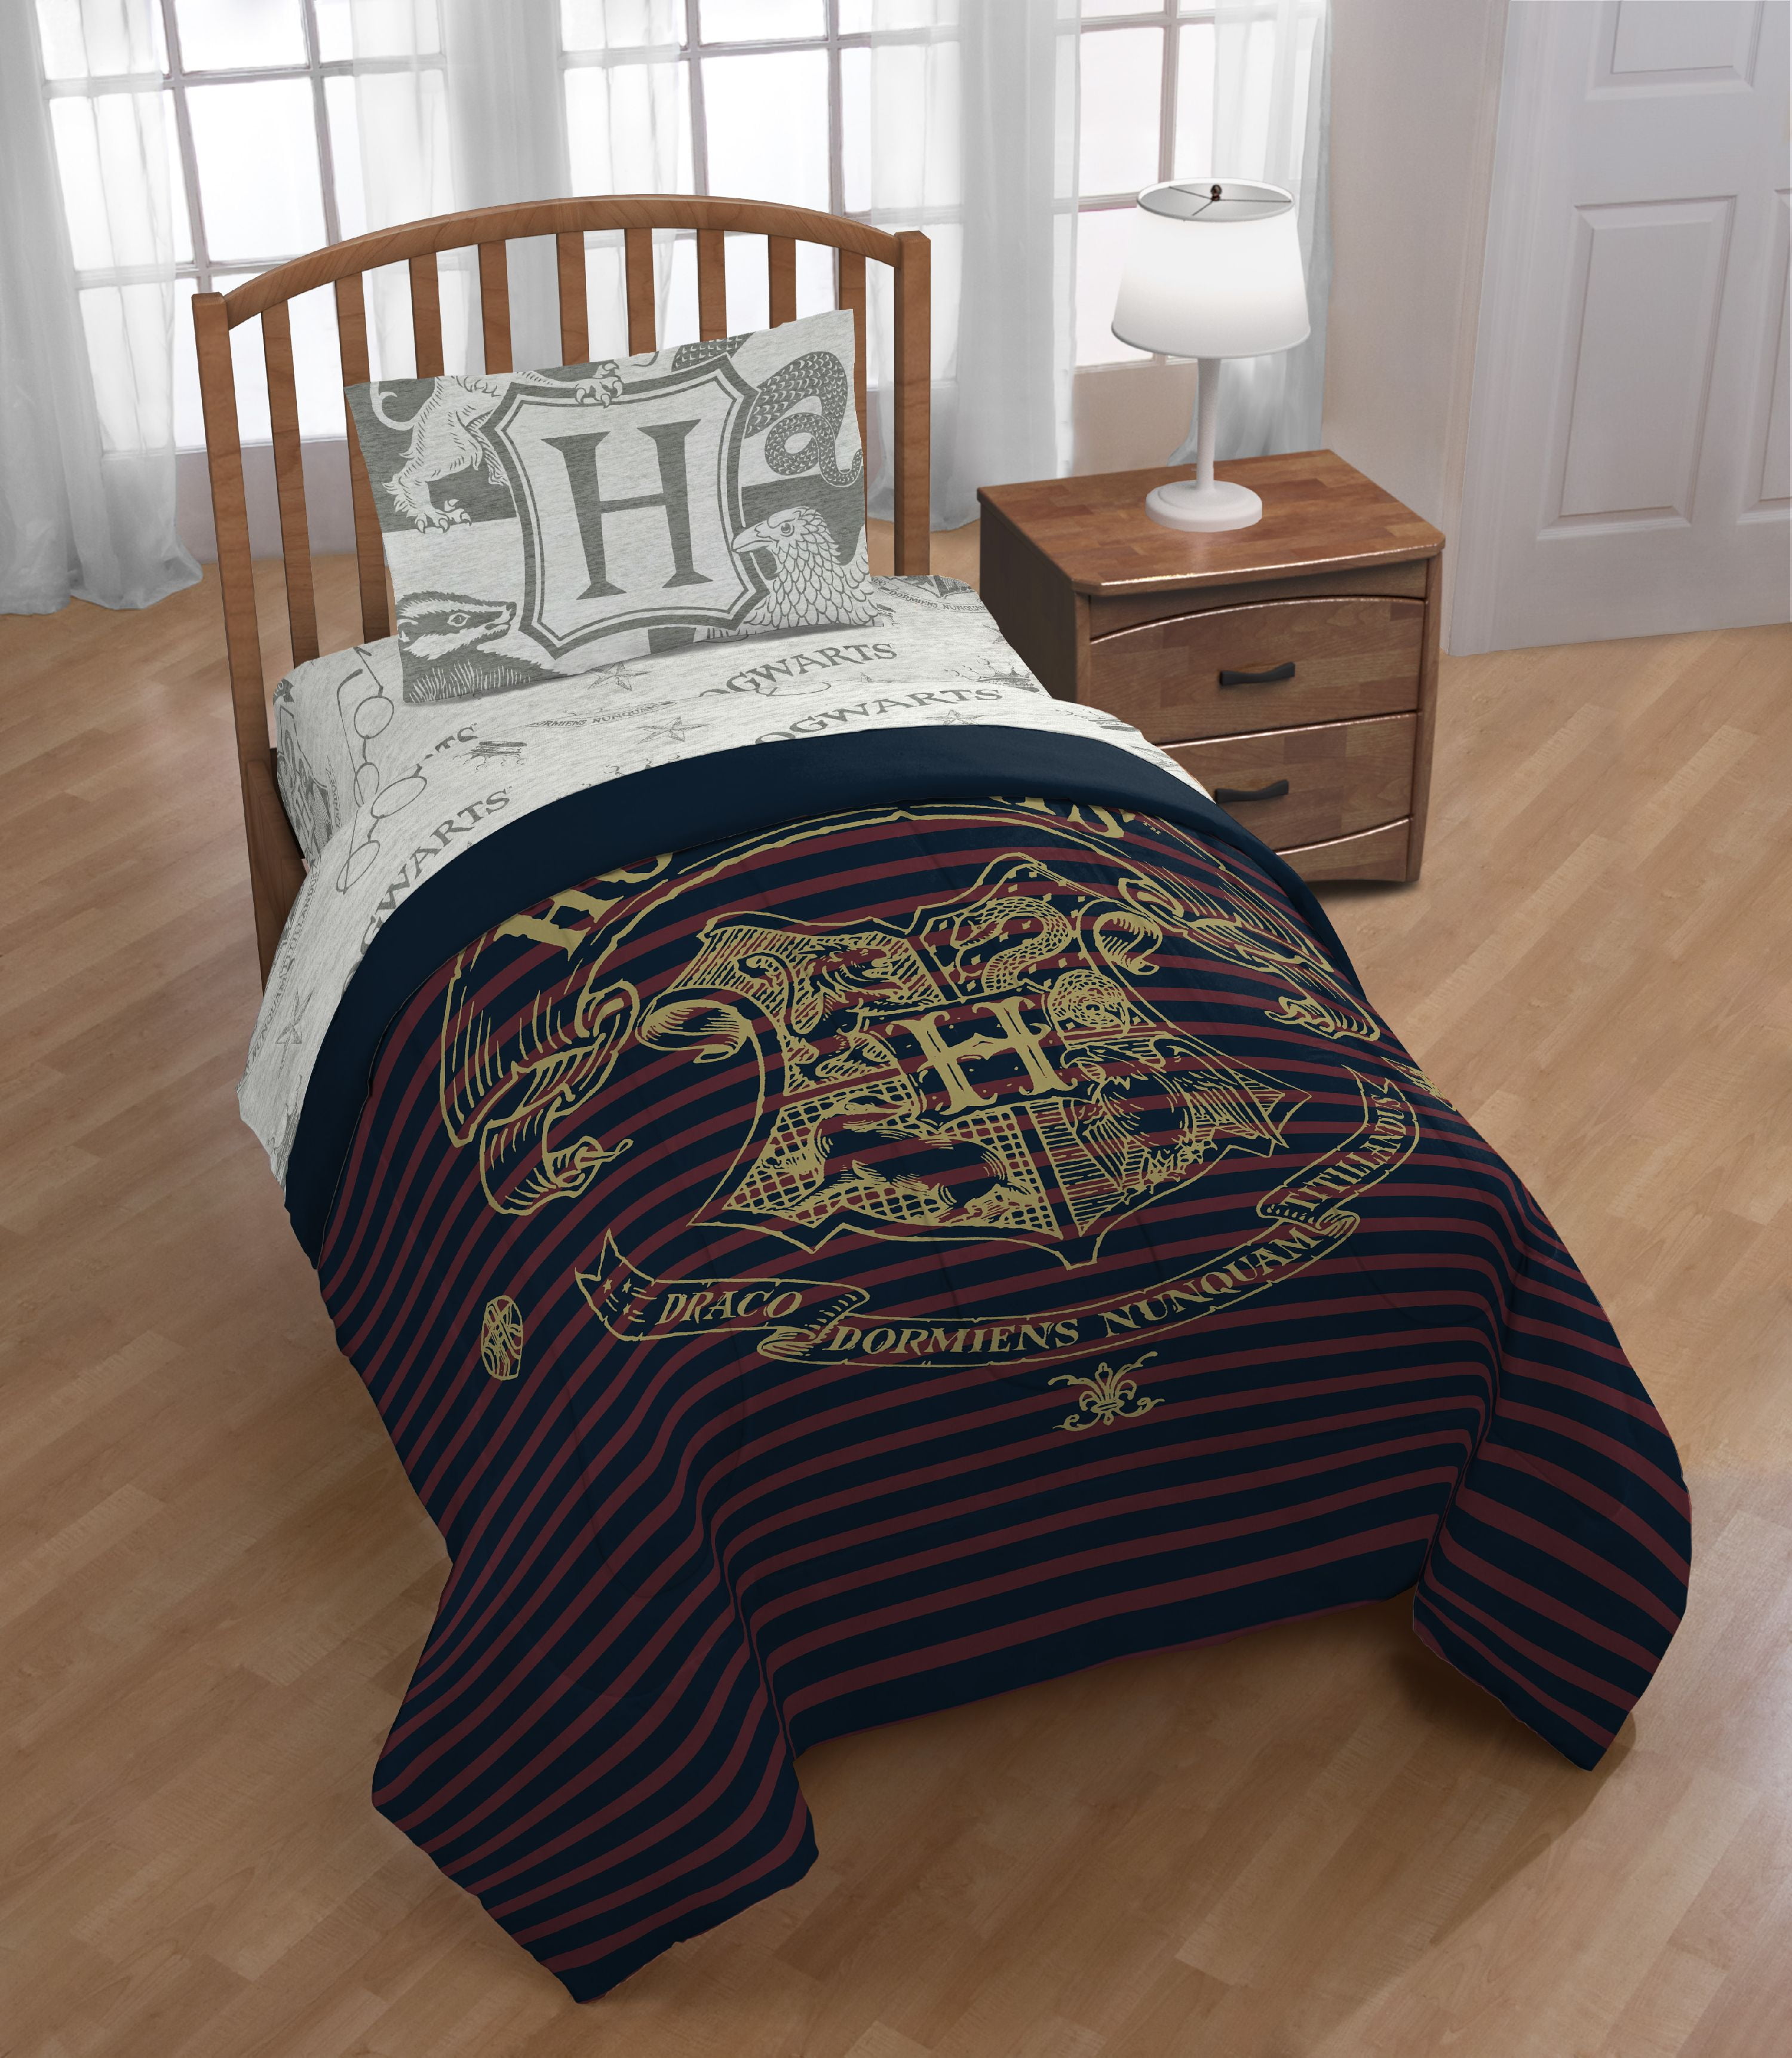 Bedding Features Hogwarts Logo Includes Reversible Comforter & Sheet Set Official Harry Potter Product Jay Franco Harry Potter Spellbound 5 Piece Full Bed Set Super Soft Polyester 